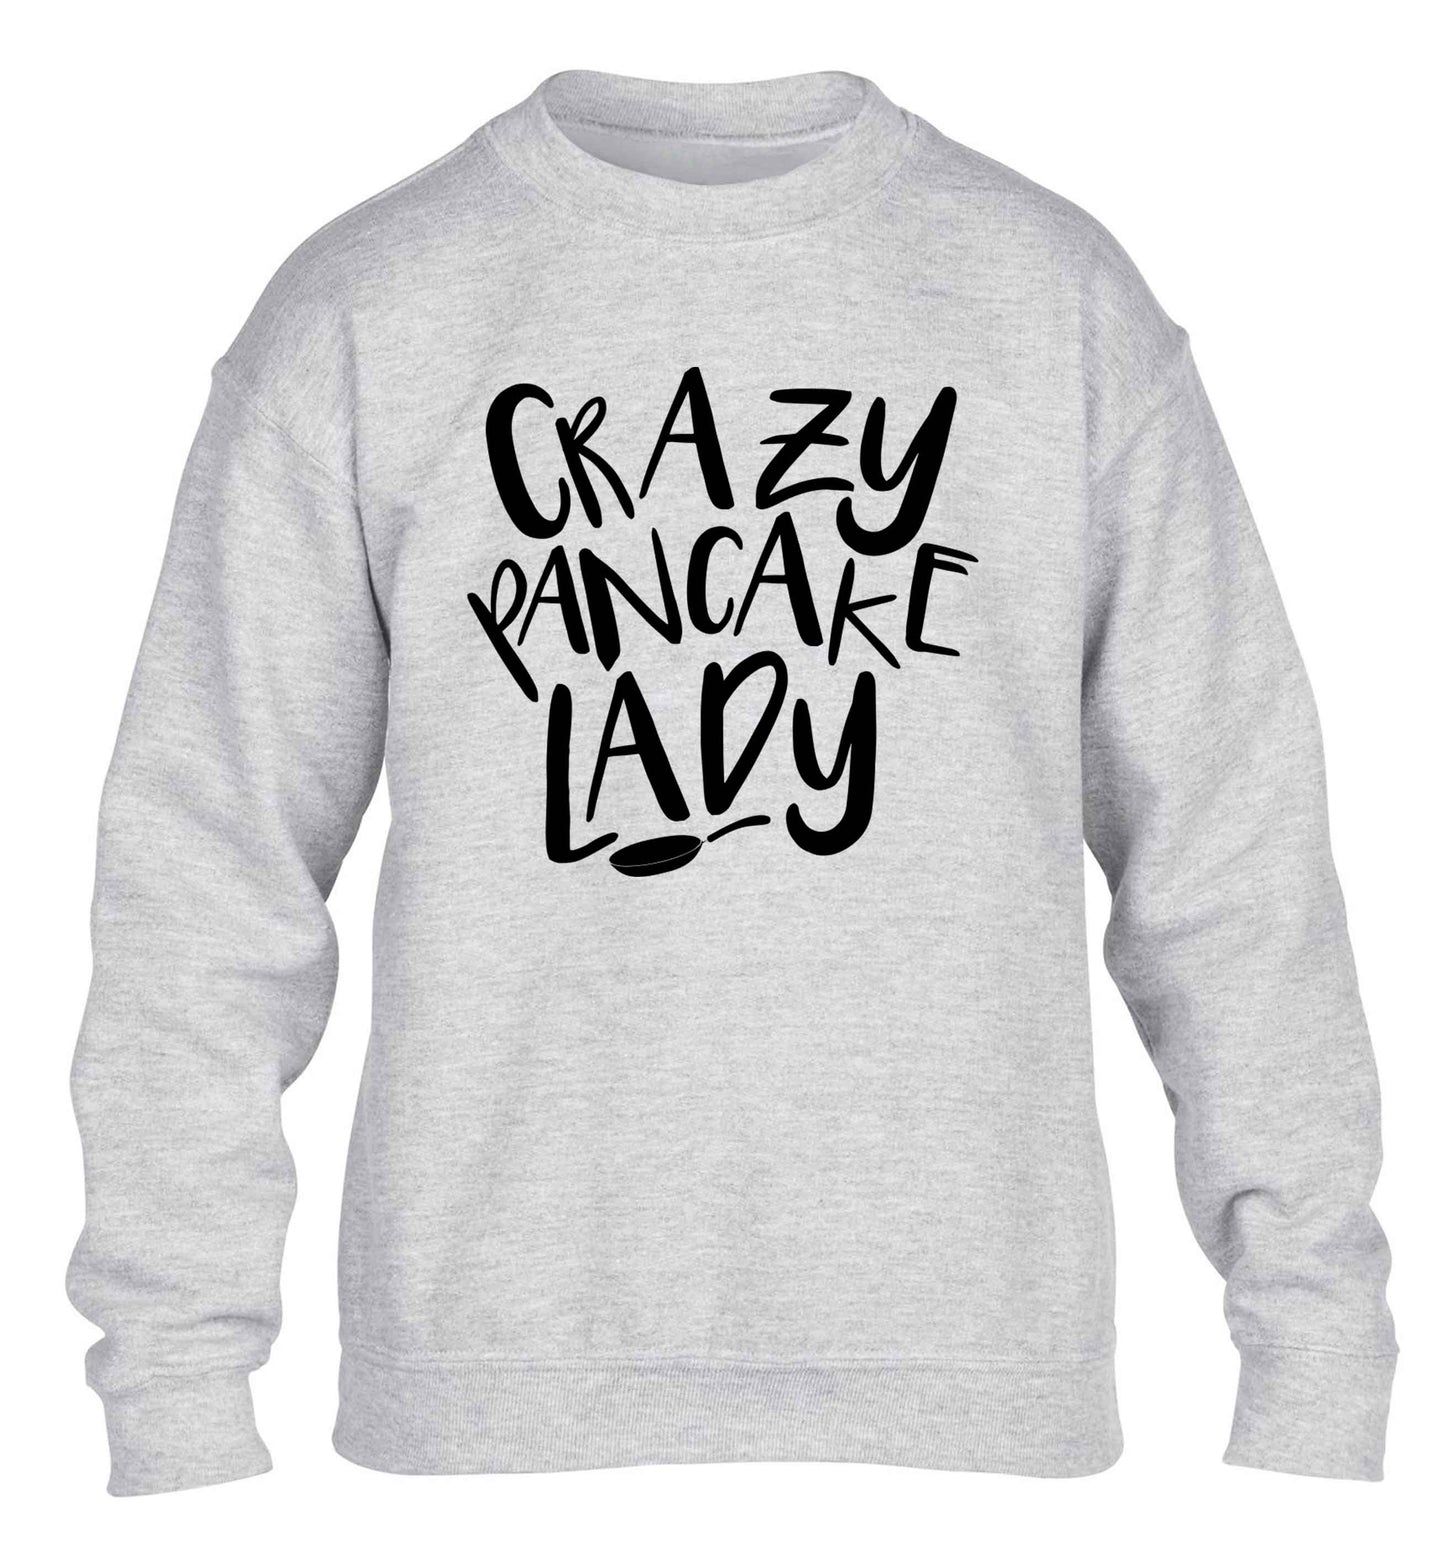 Crazy pancake lady children's grey sweater 12-13 Years